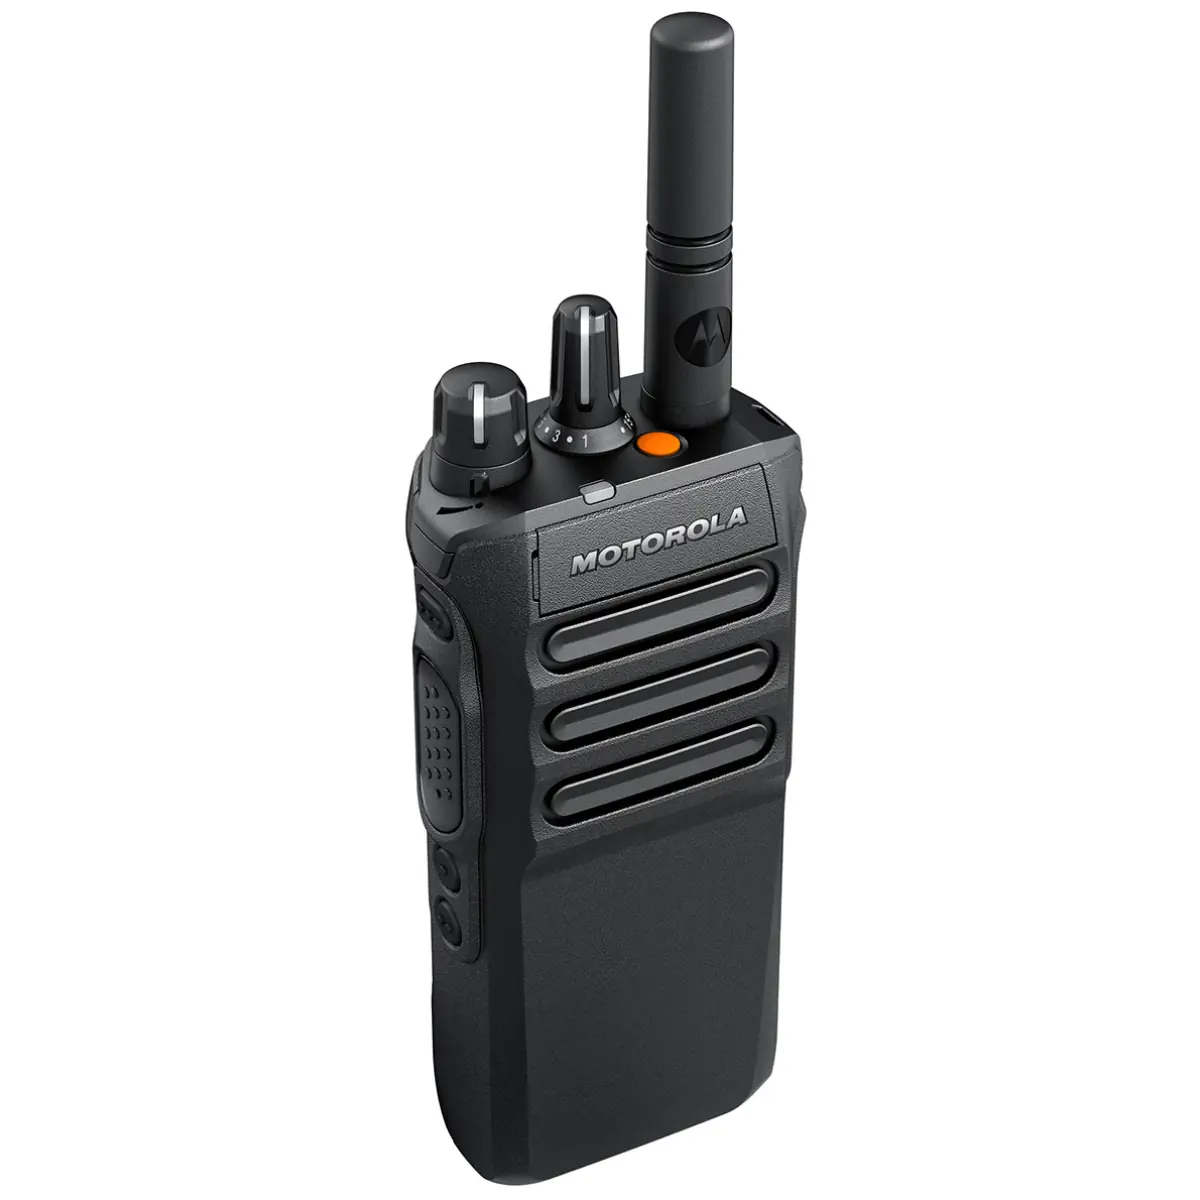 Motorola MOTOTRBO R7A - portofoon vergunningsplichtig digitaal, frequenties UHF